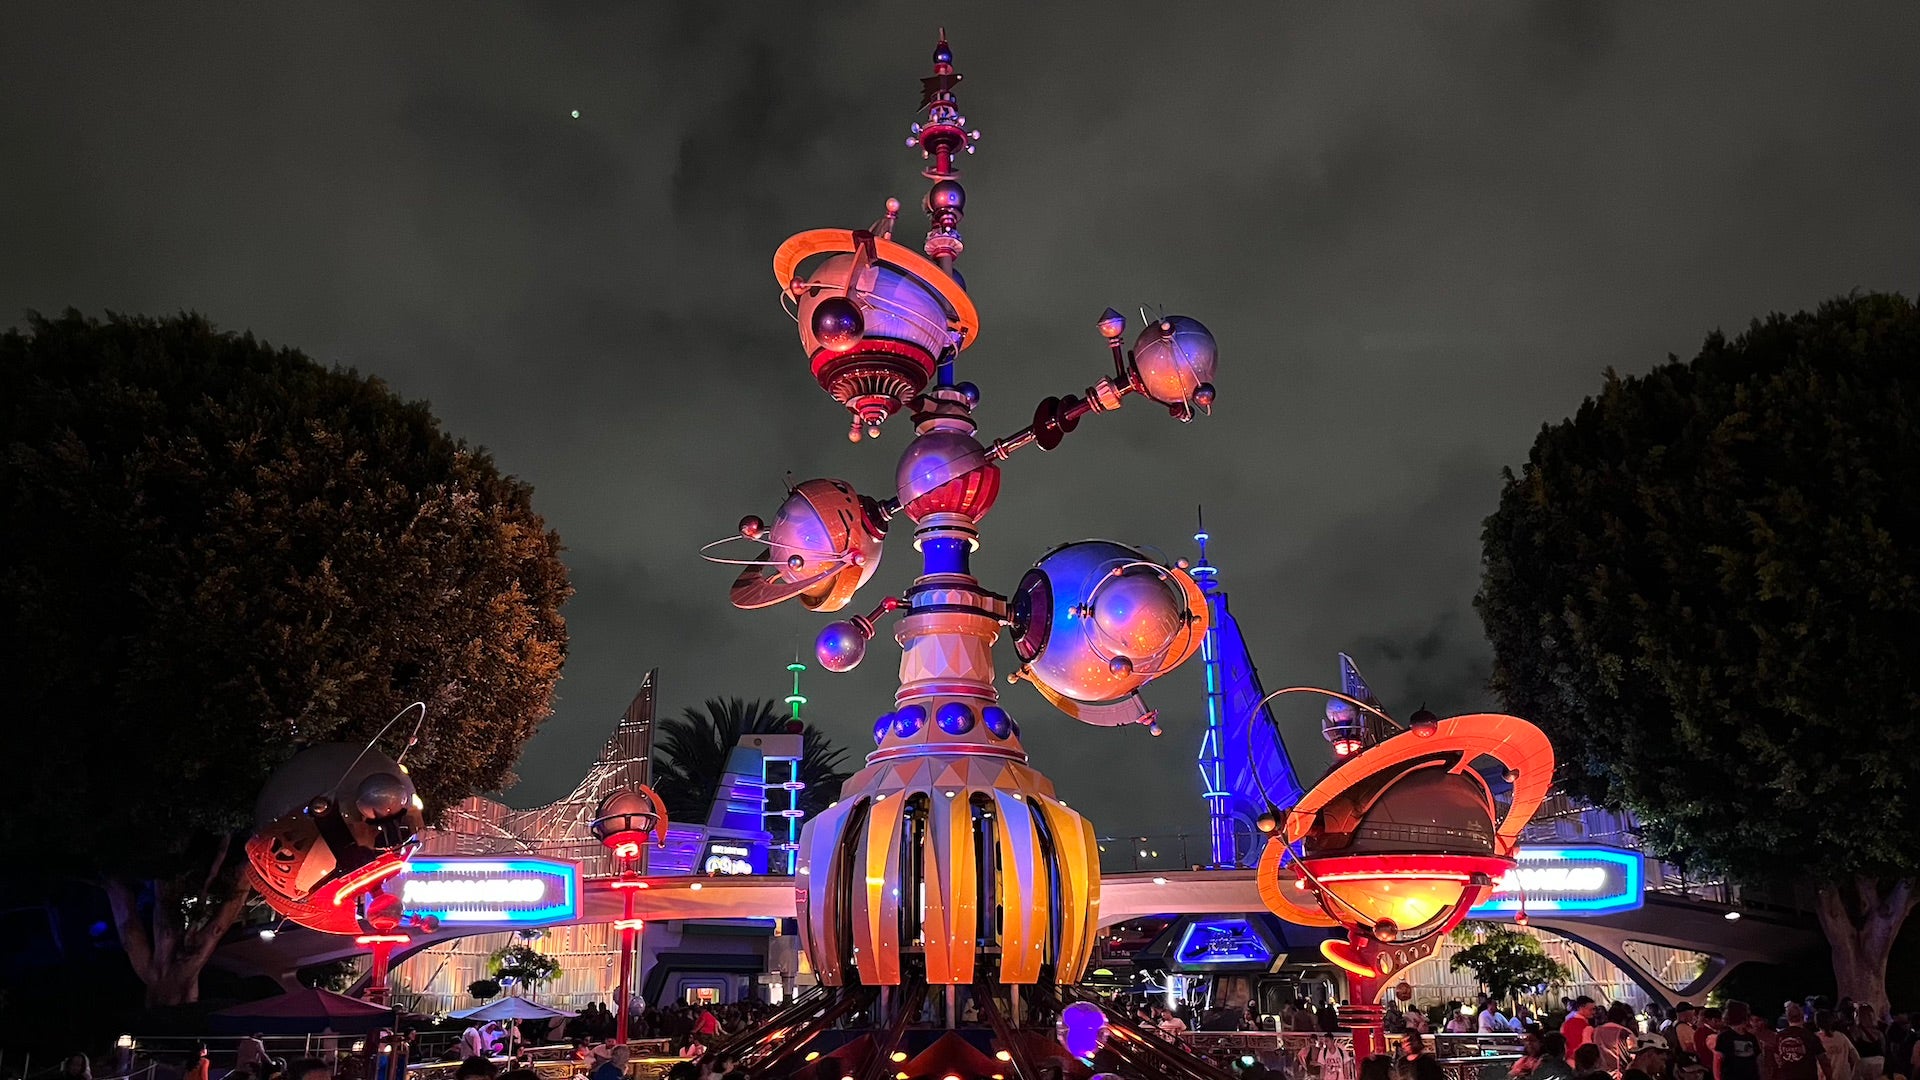 Night shot of a large futuristic statue at Tomorrowland in Disney World